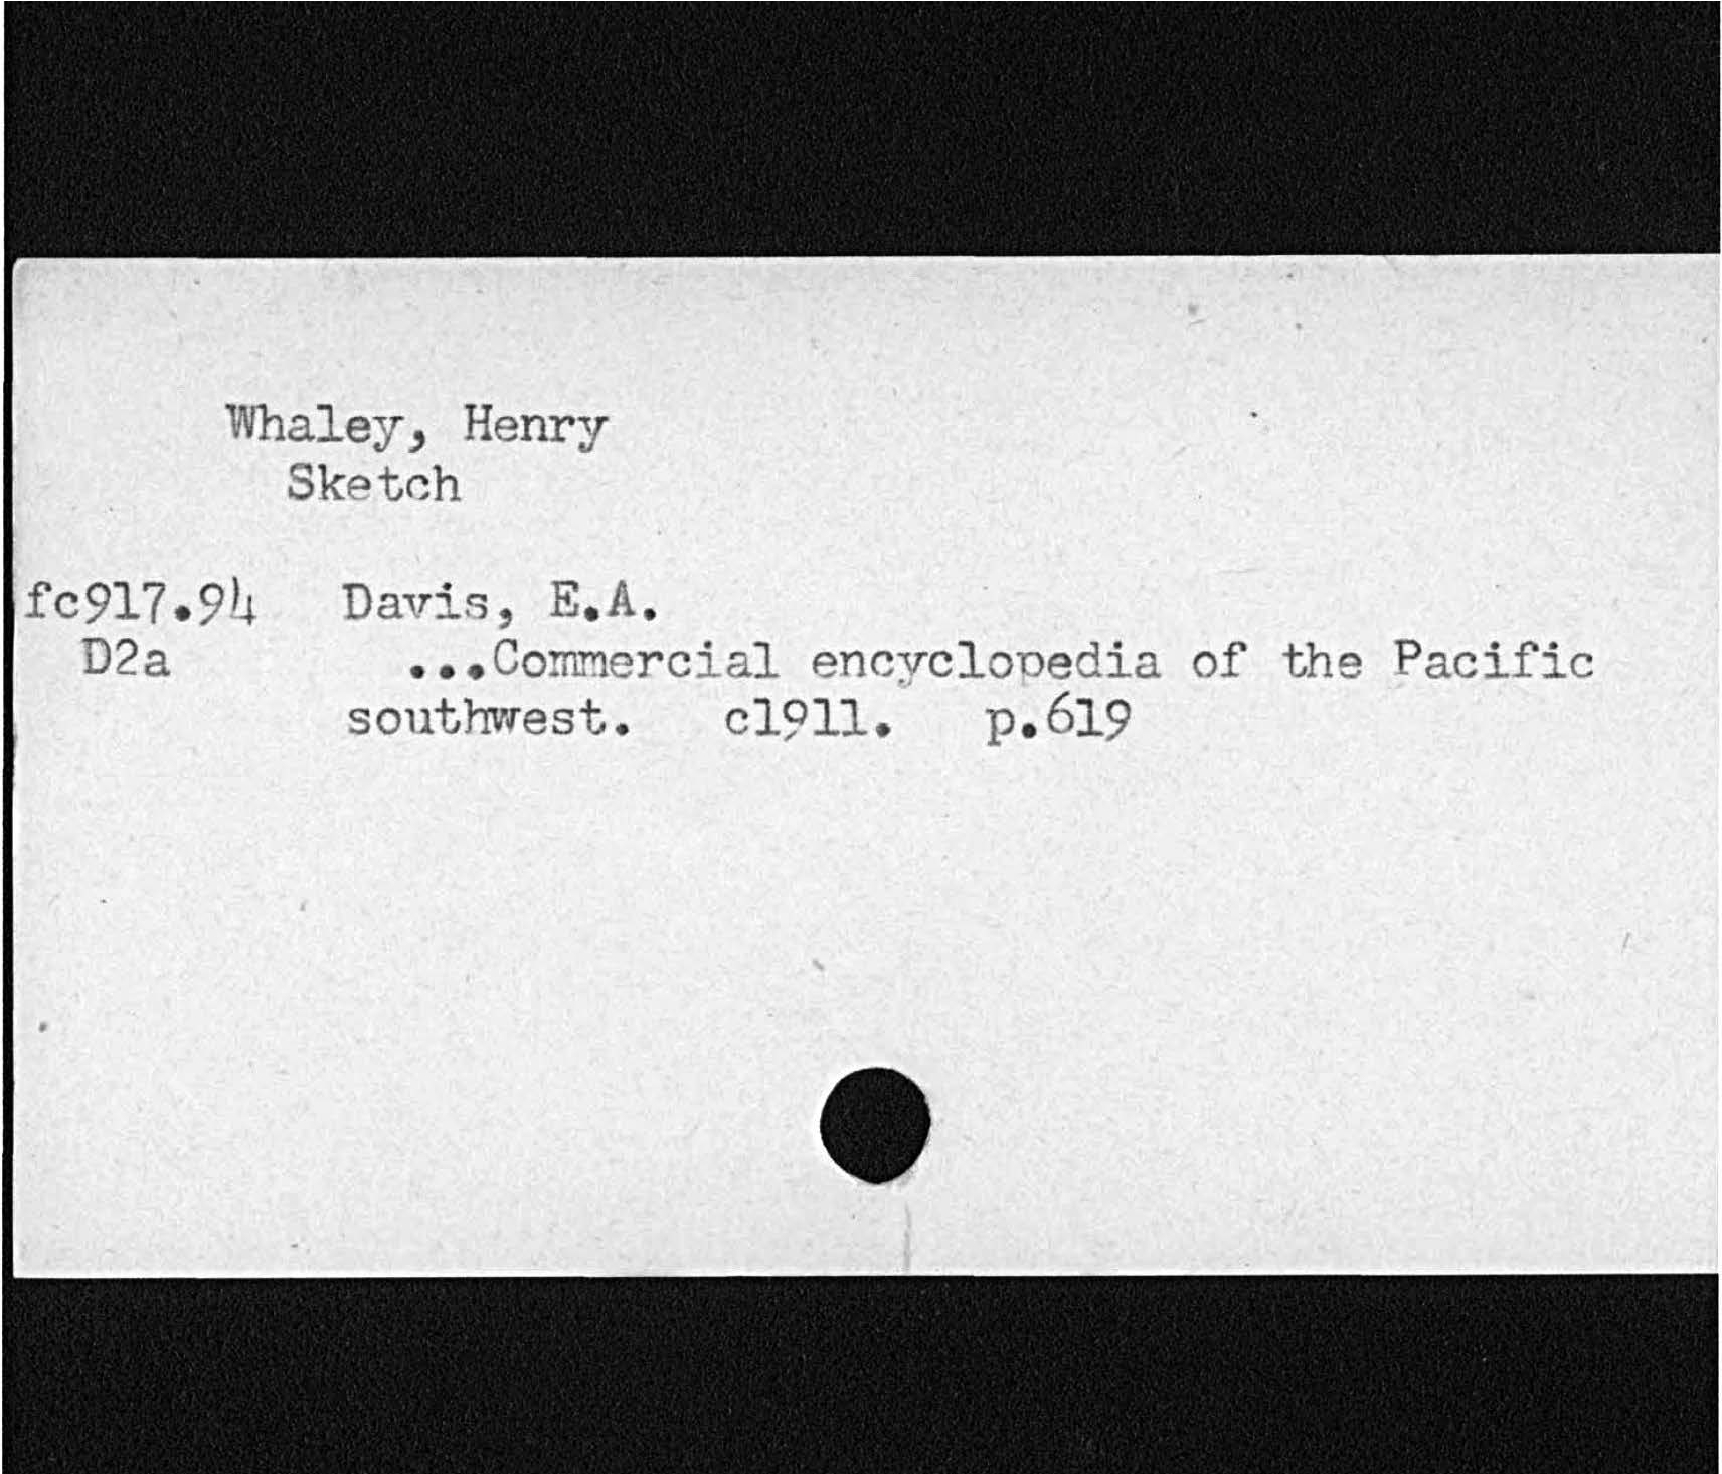 Whaley, HenrySketchDavis, E. ACommercial encyclopedia of the Pacificsouthwest cl911. p. 619   fc917. 94  D2a